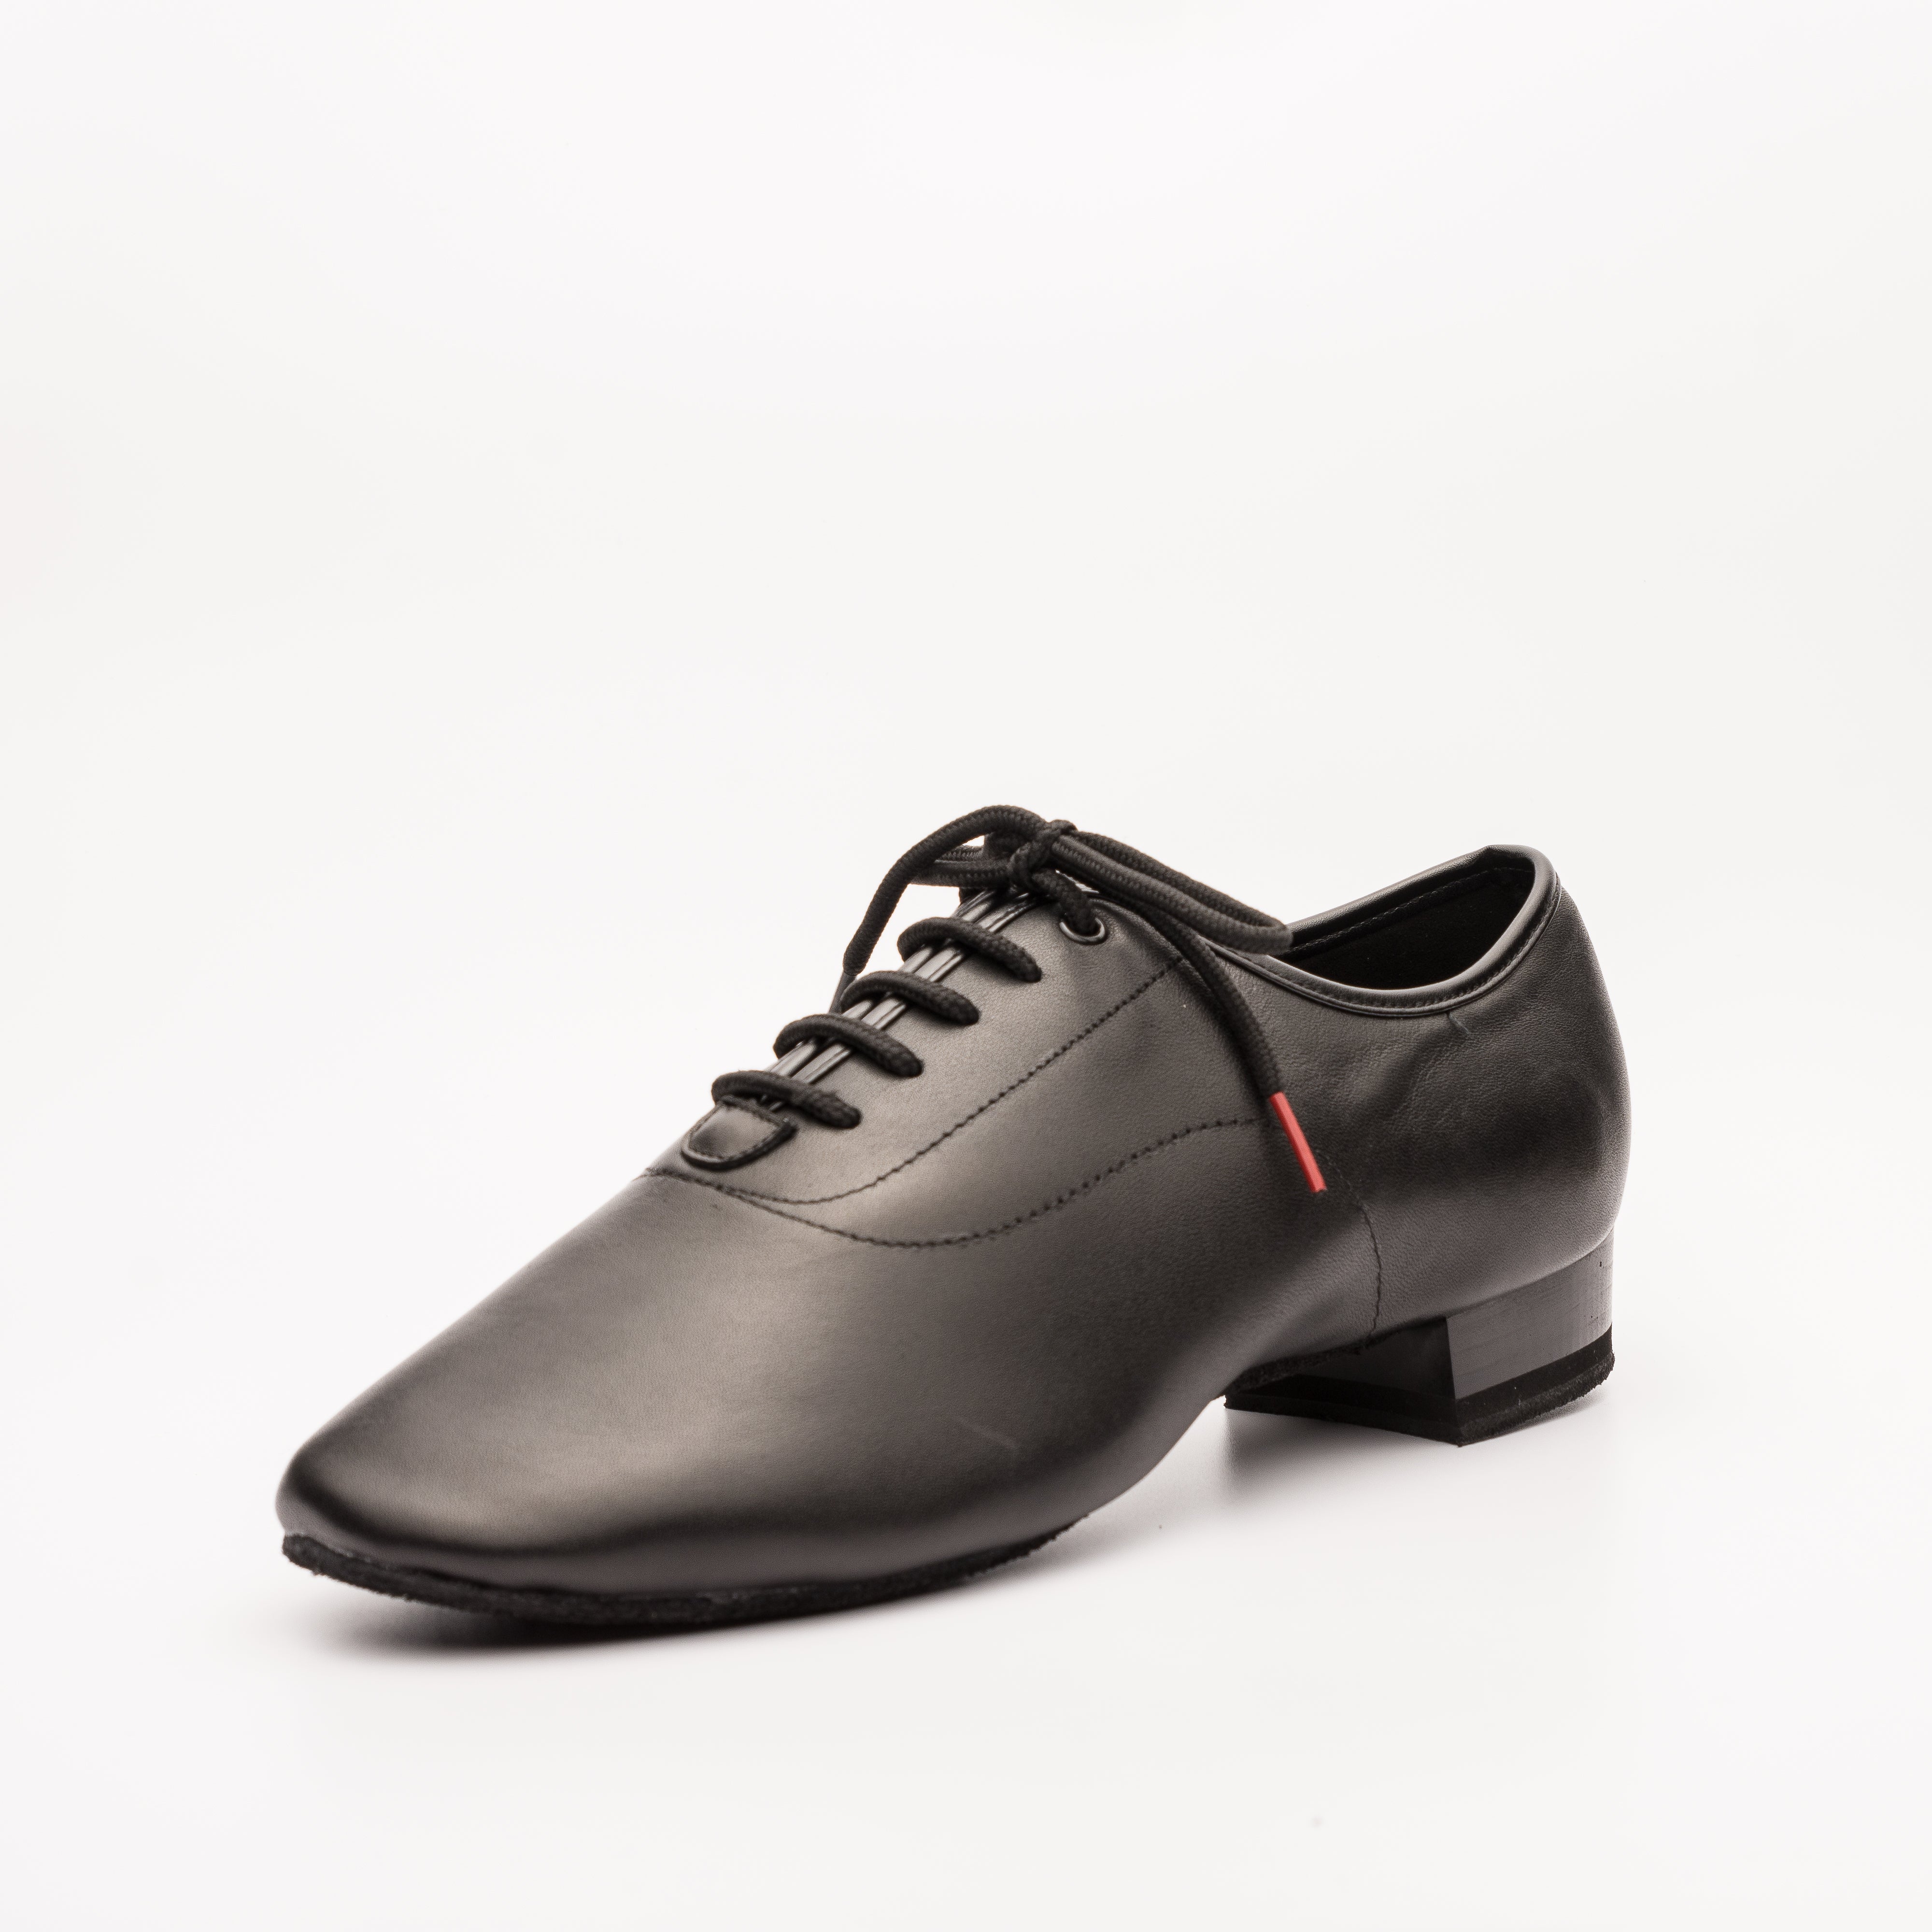 Men's shoes PRO Edition Leather - Low Heel